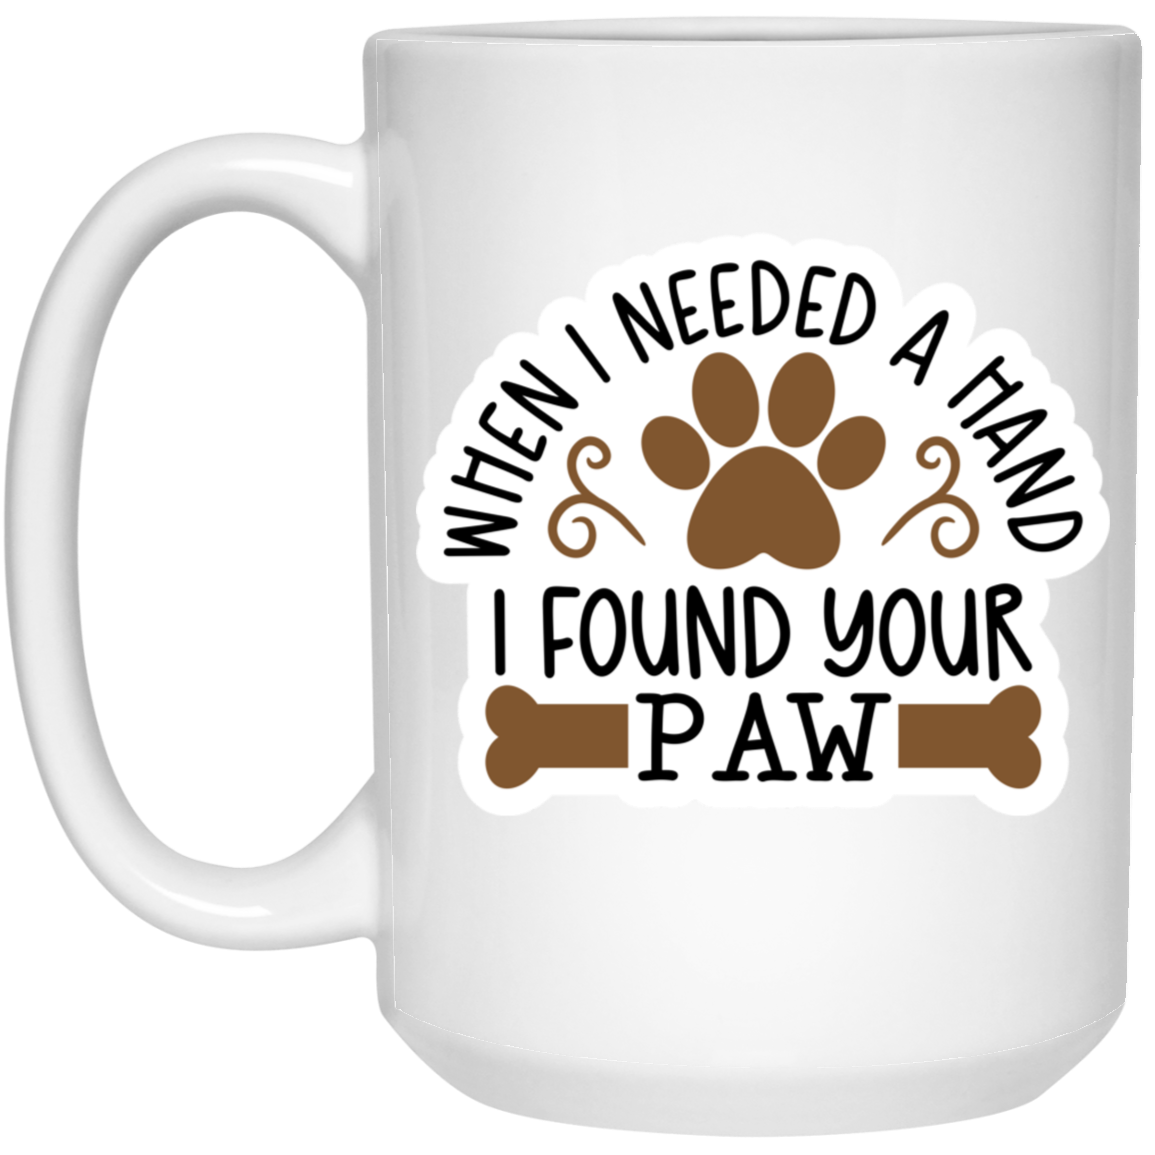 When I Needed a Hand I Found Your Paw Dog Rescue 15 oz. White Mug